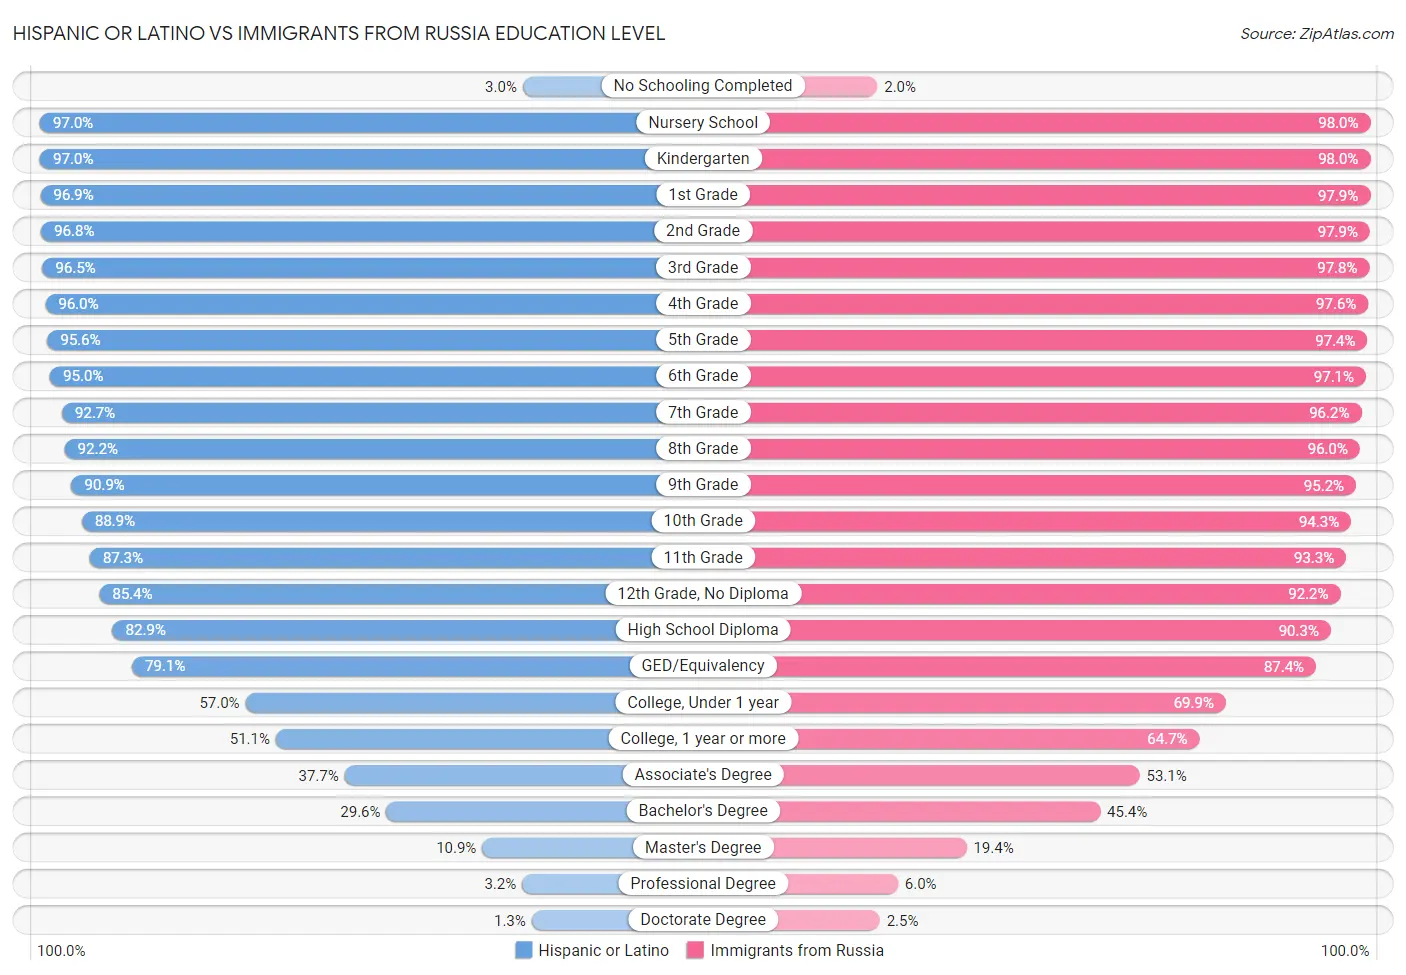 Hispanic or Latino vs Immigrants from Russia Education Level